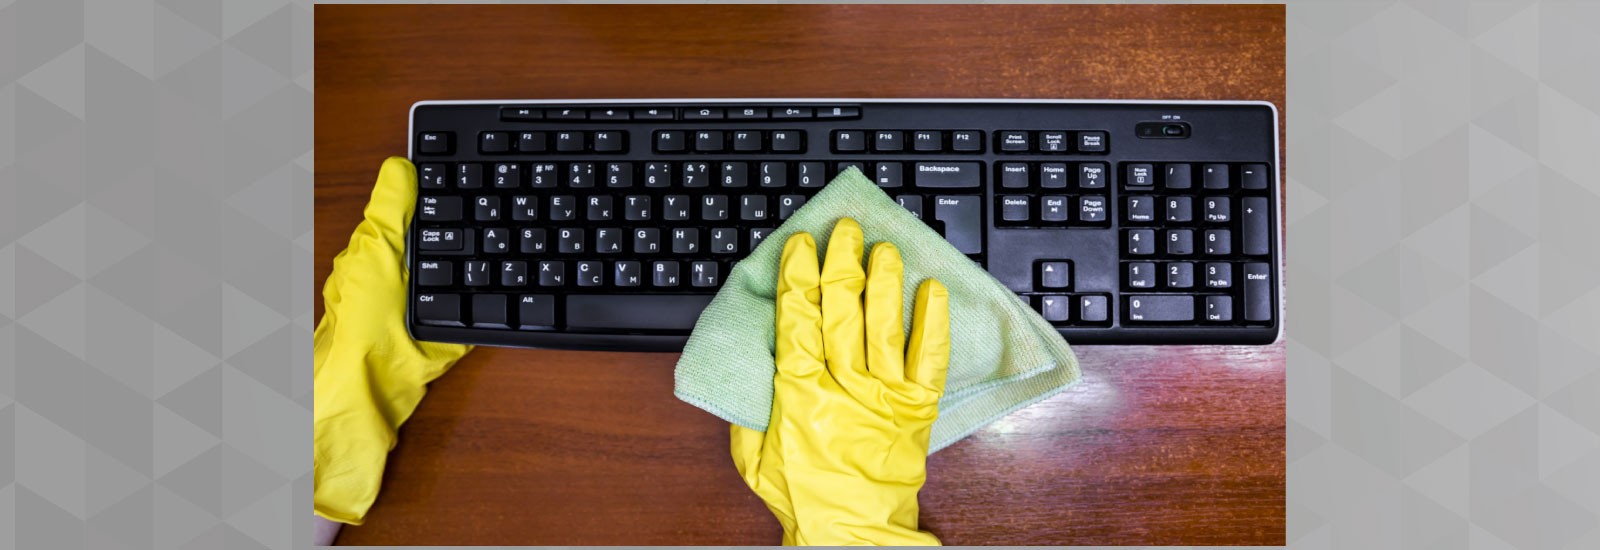 dusty keyboard being cleaned